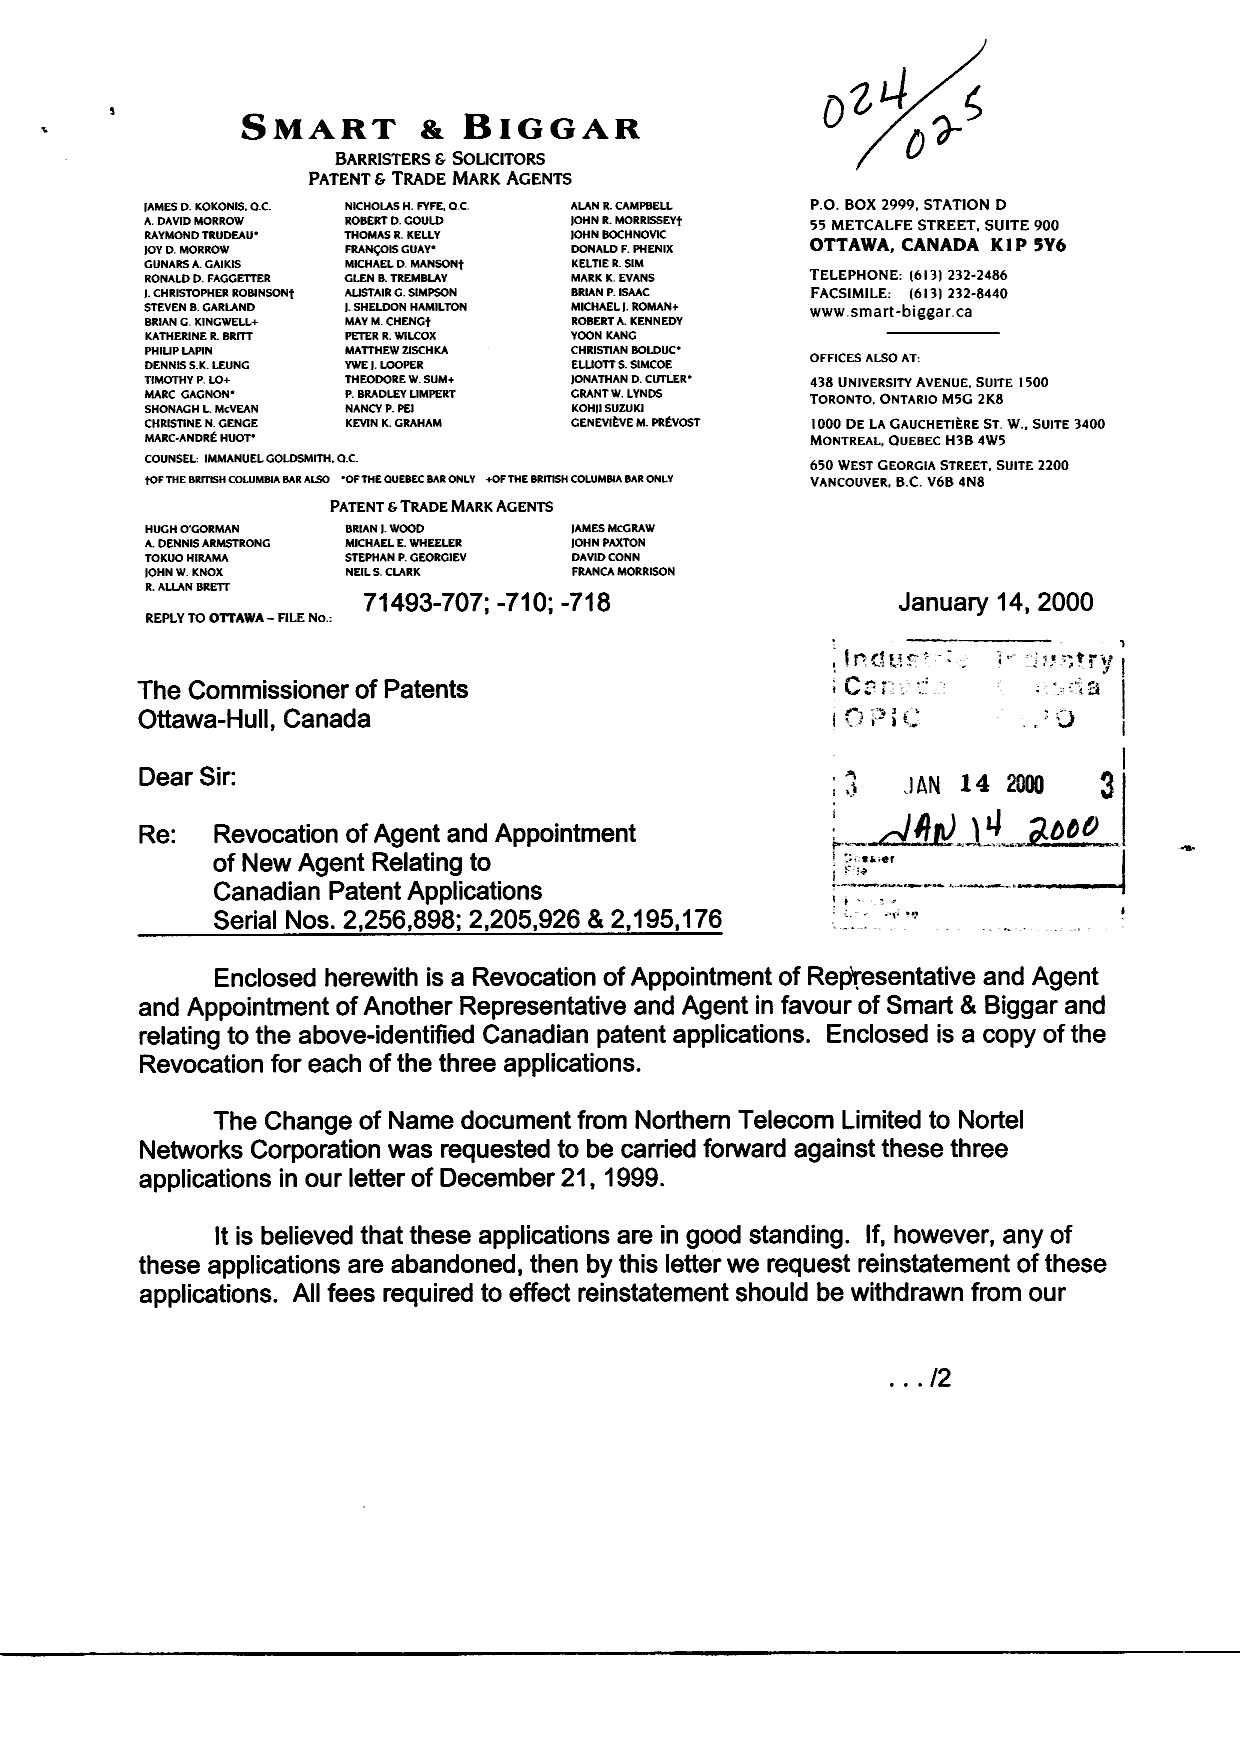 Canadian Patent Document 2256898. Correspondence 19991214. Image 1 of 3